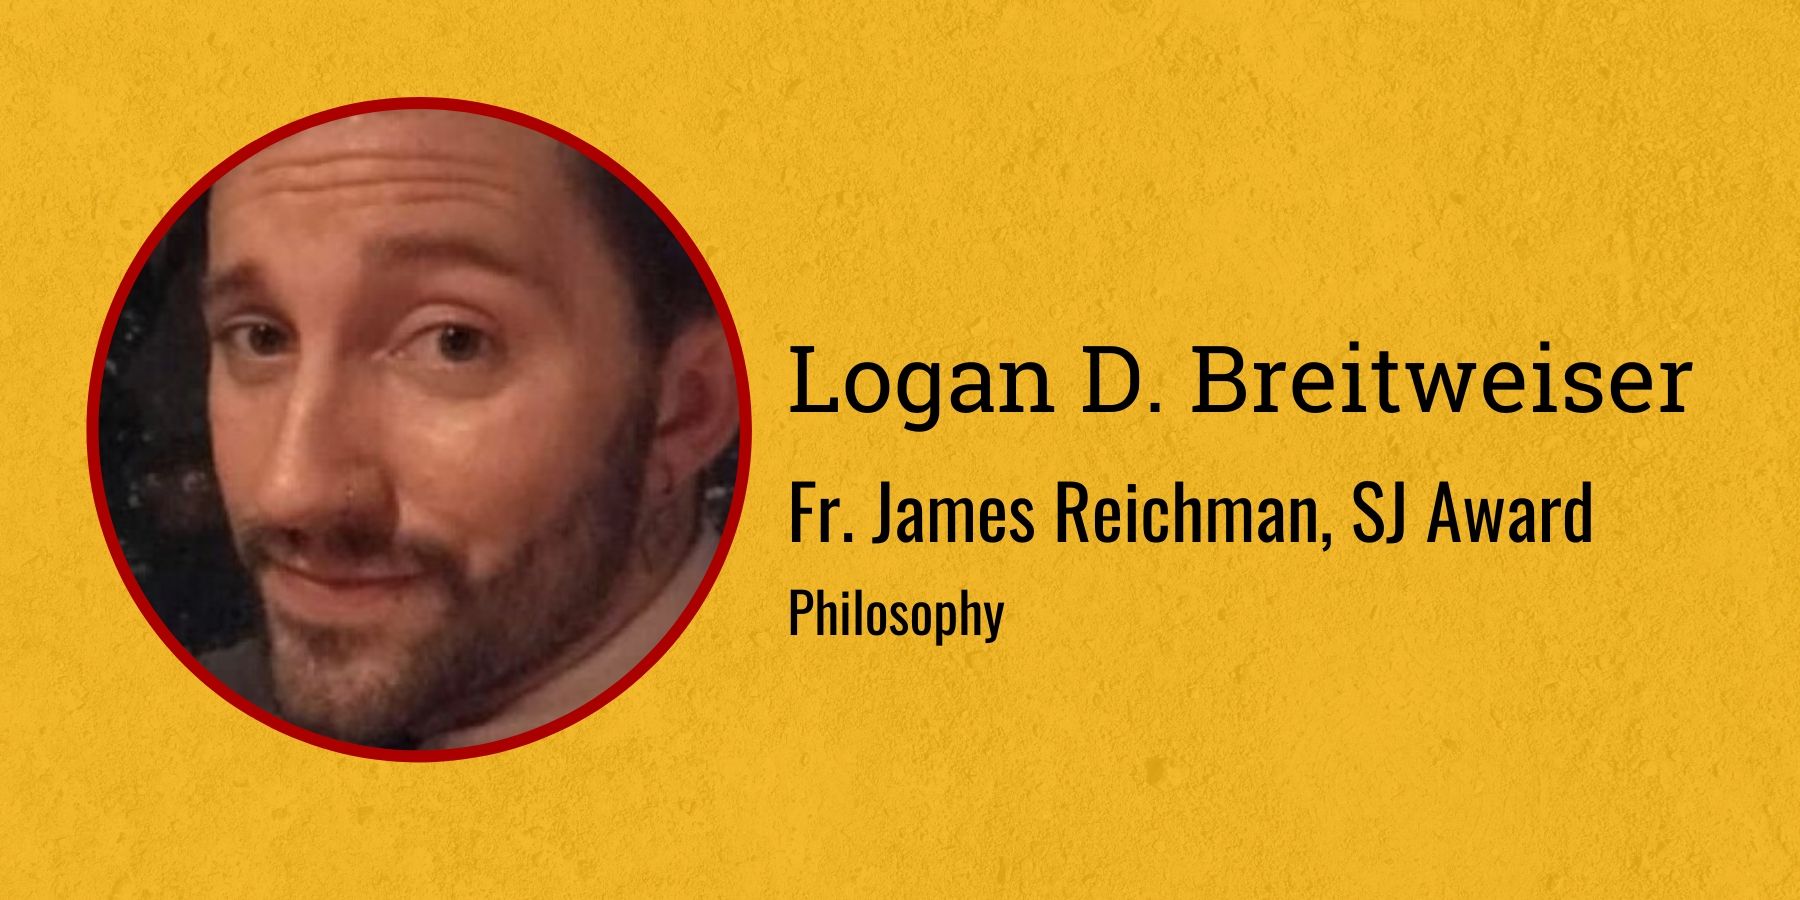 Photo of Logan Breitweiser and text Fr. James Reichman, SJ Award, Philosophy